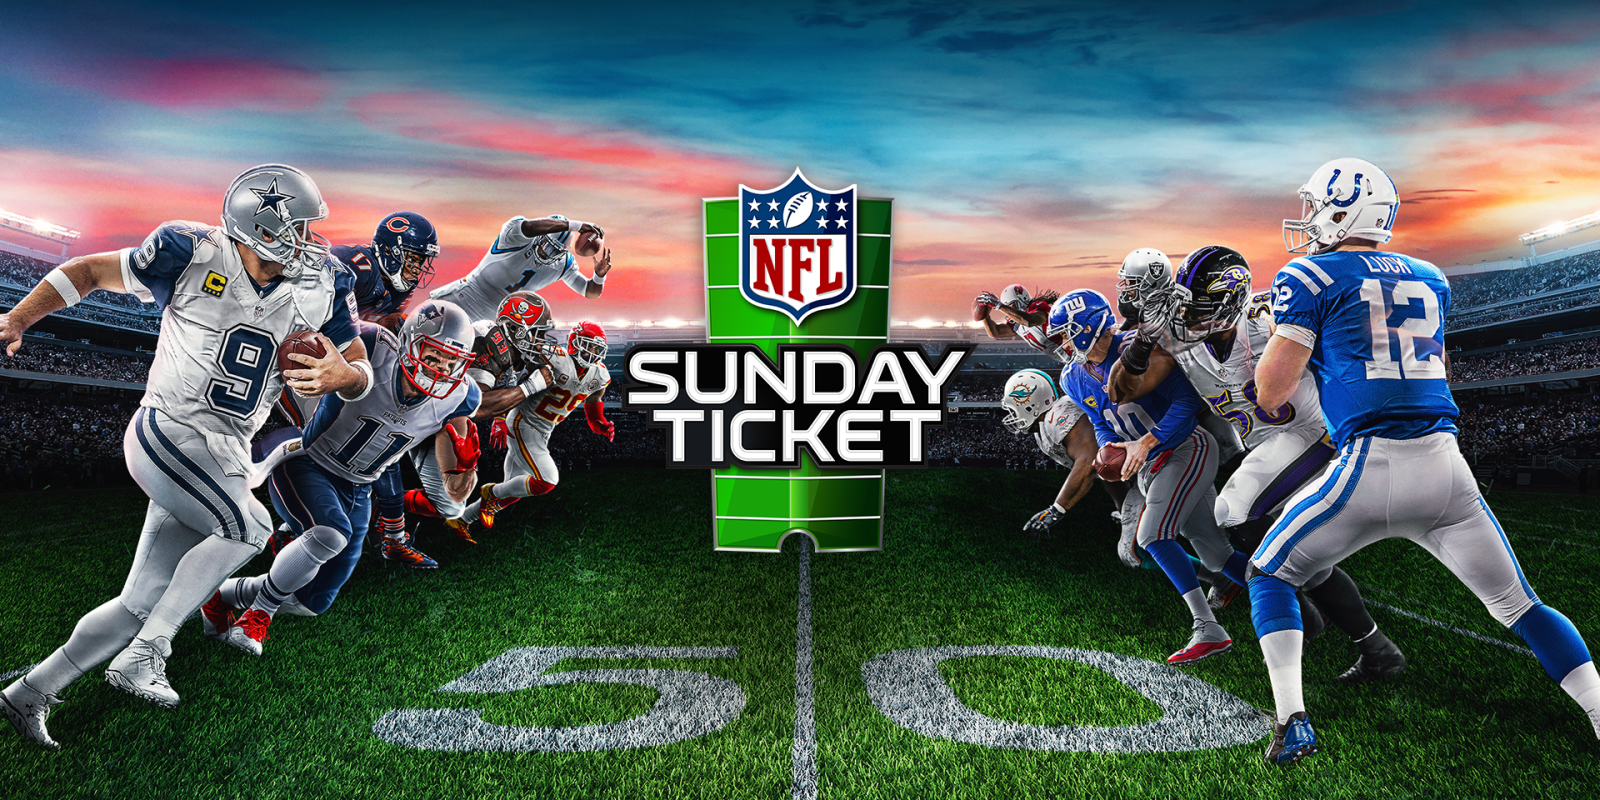 NFL Sunday Ticket Discount - wide 10